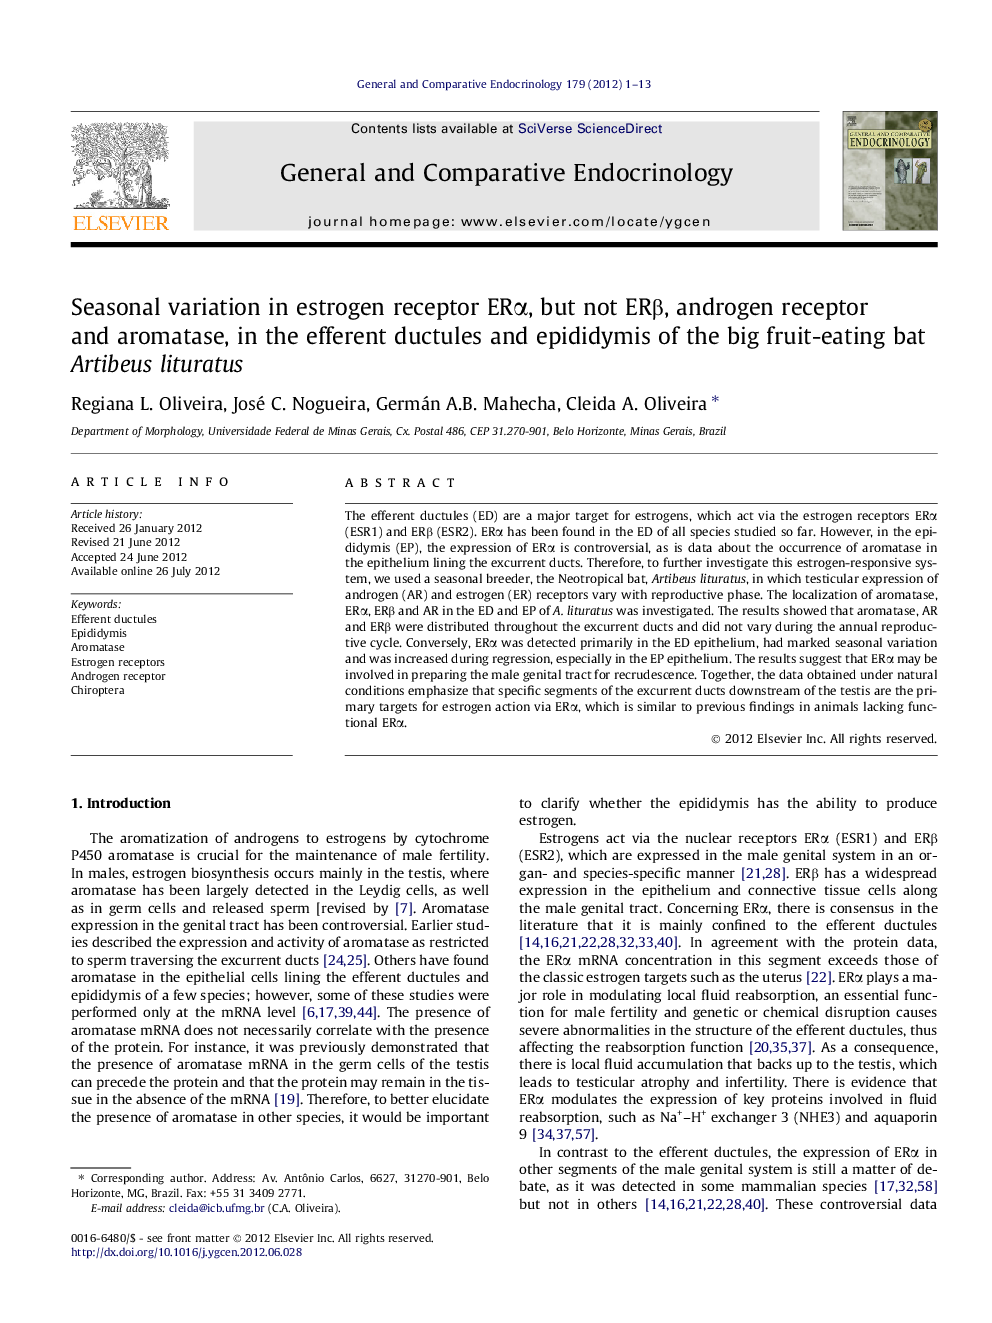 Seasonal variation in estrogen receptor ERÎ±, but not ERÎ², androgen receptor and aromatase, in the efferent ductules and epididymis of the big fruit-eating bat Artibeus lituratus